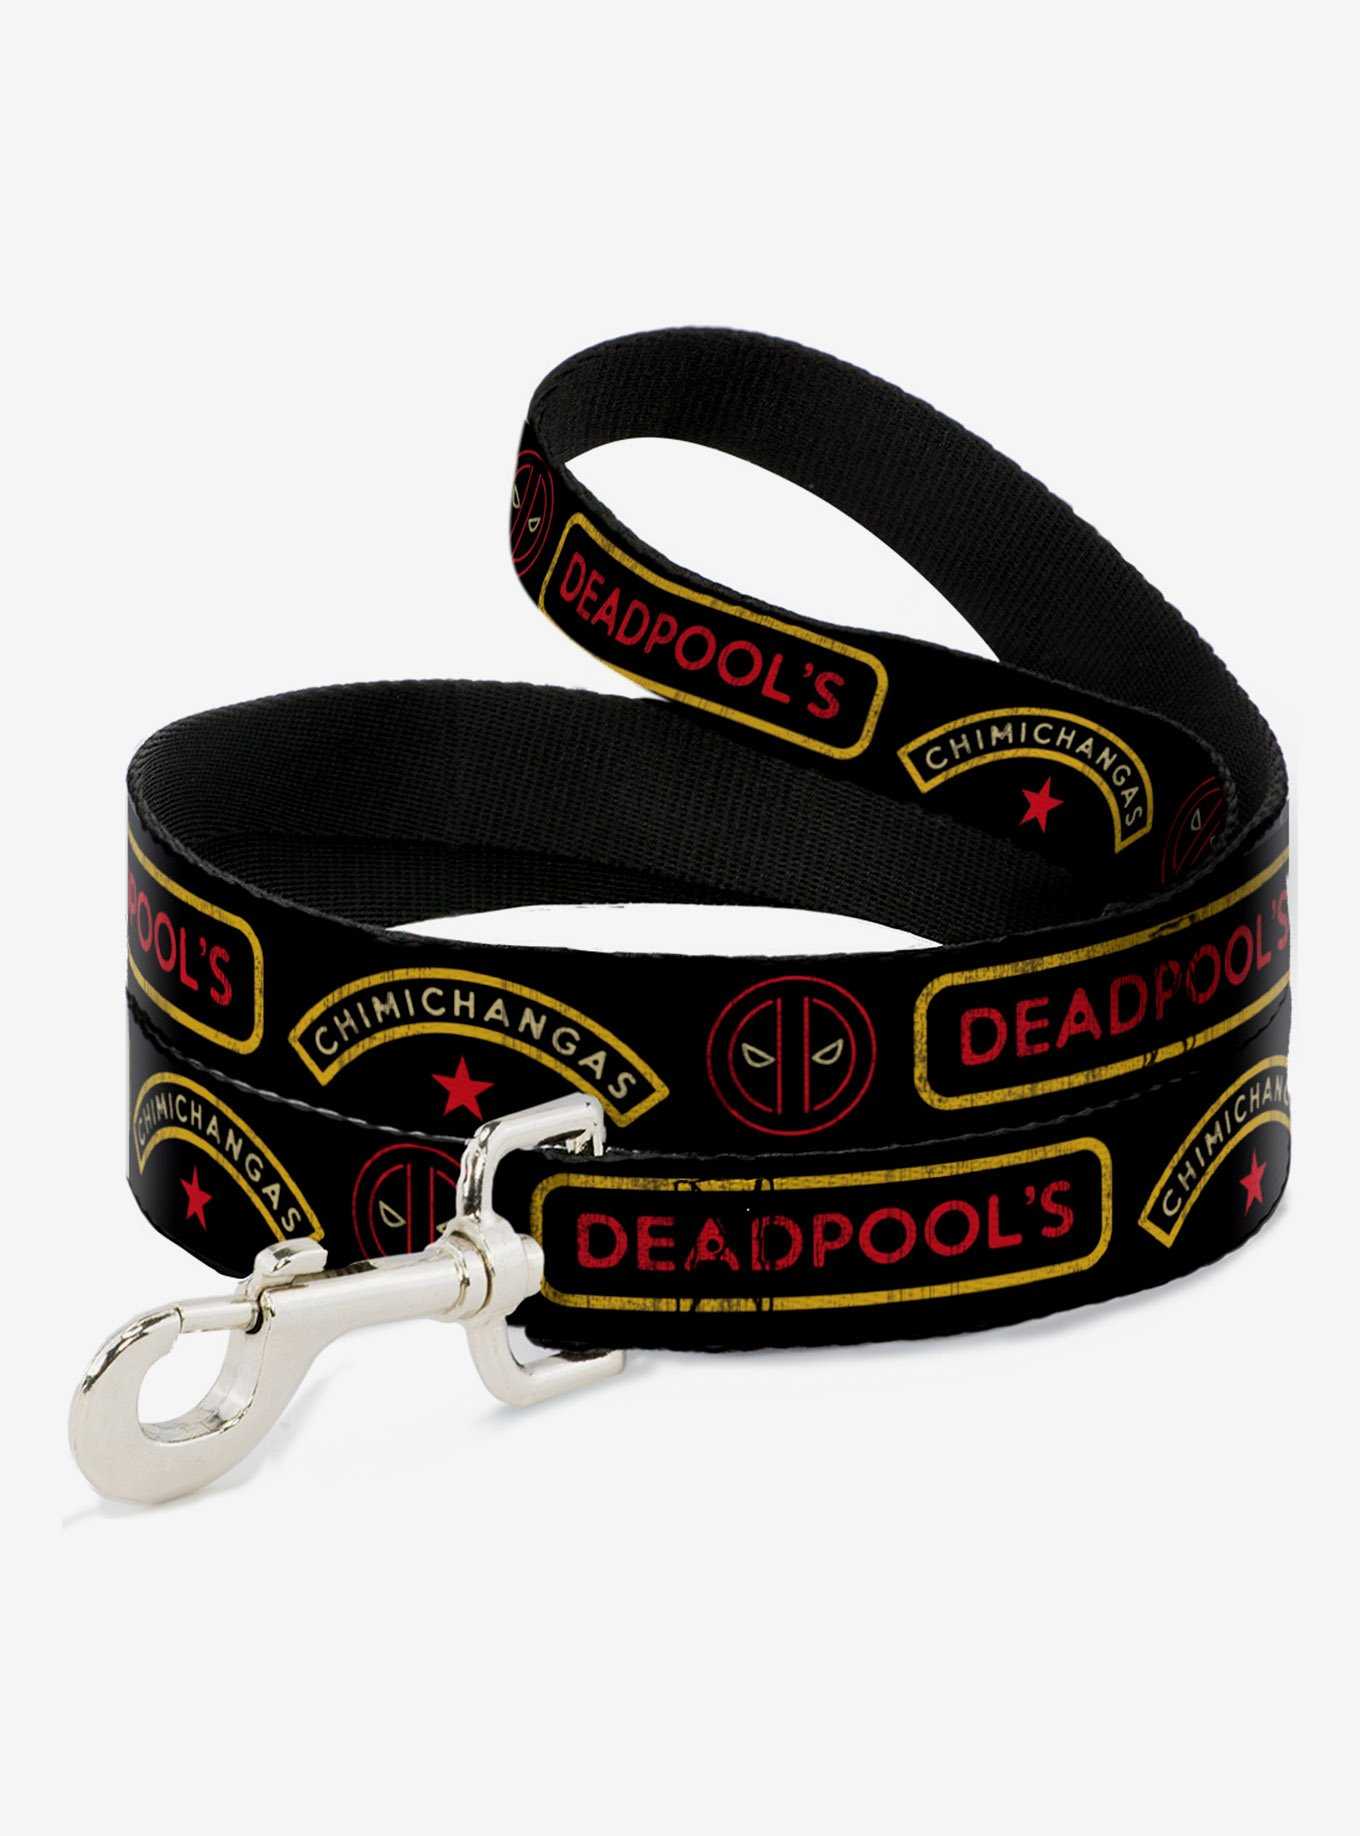 Marvel Deadpool Chimichangas Flames Dog Leash, , hi-res